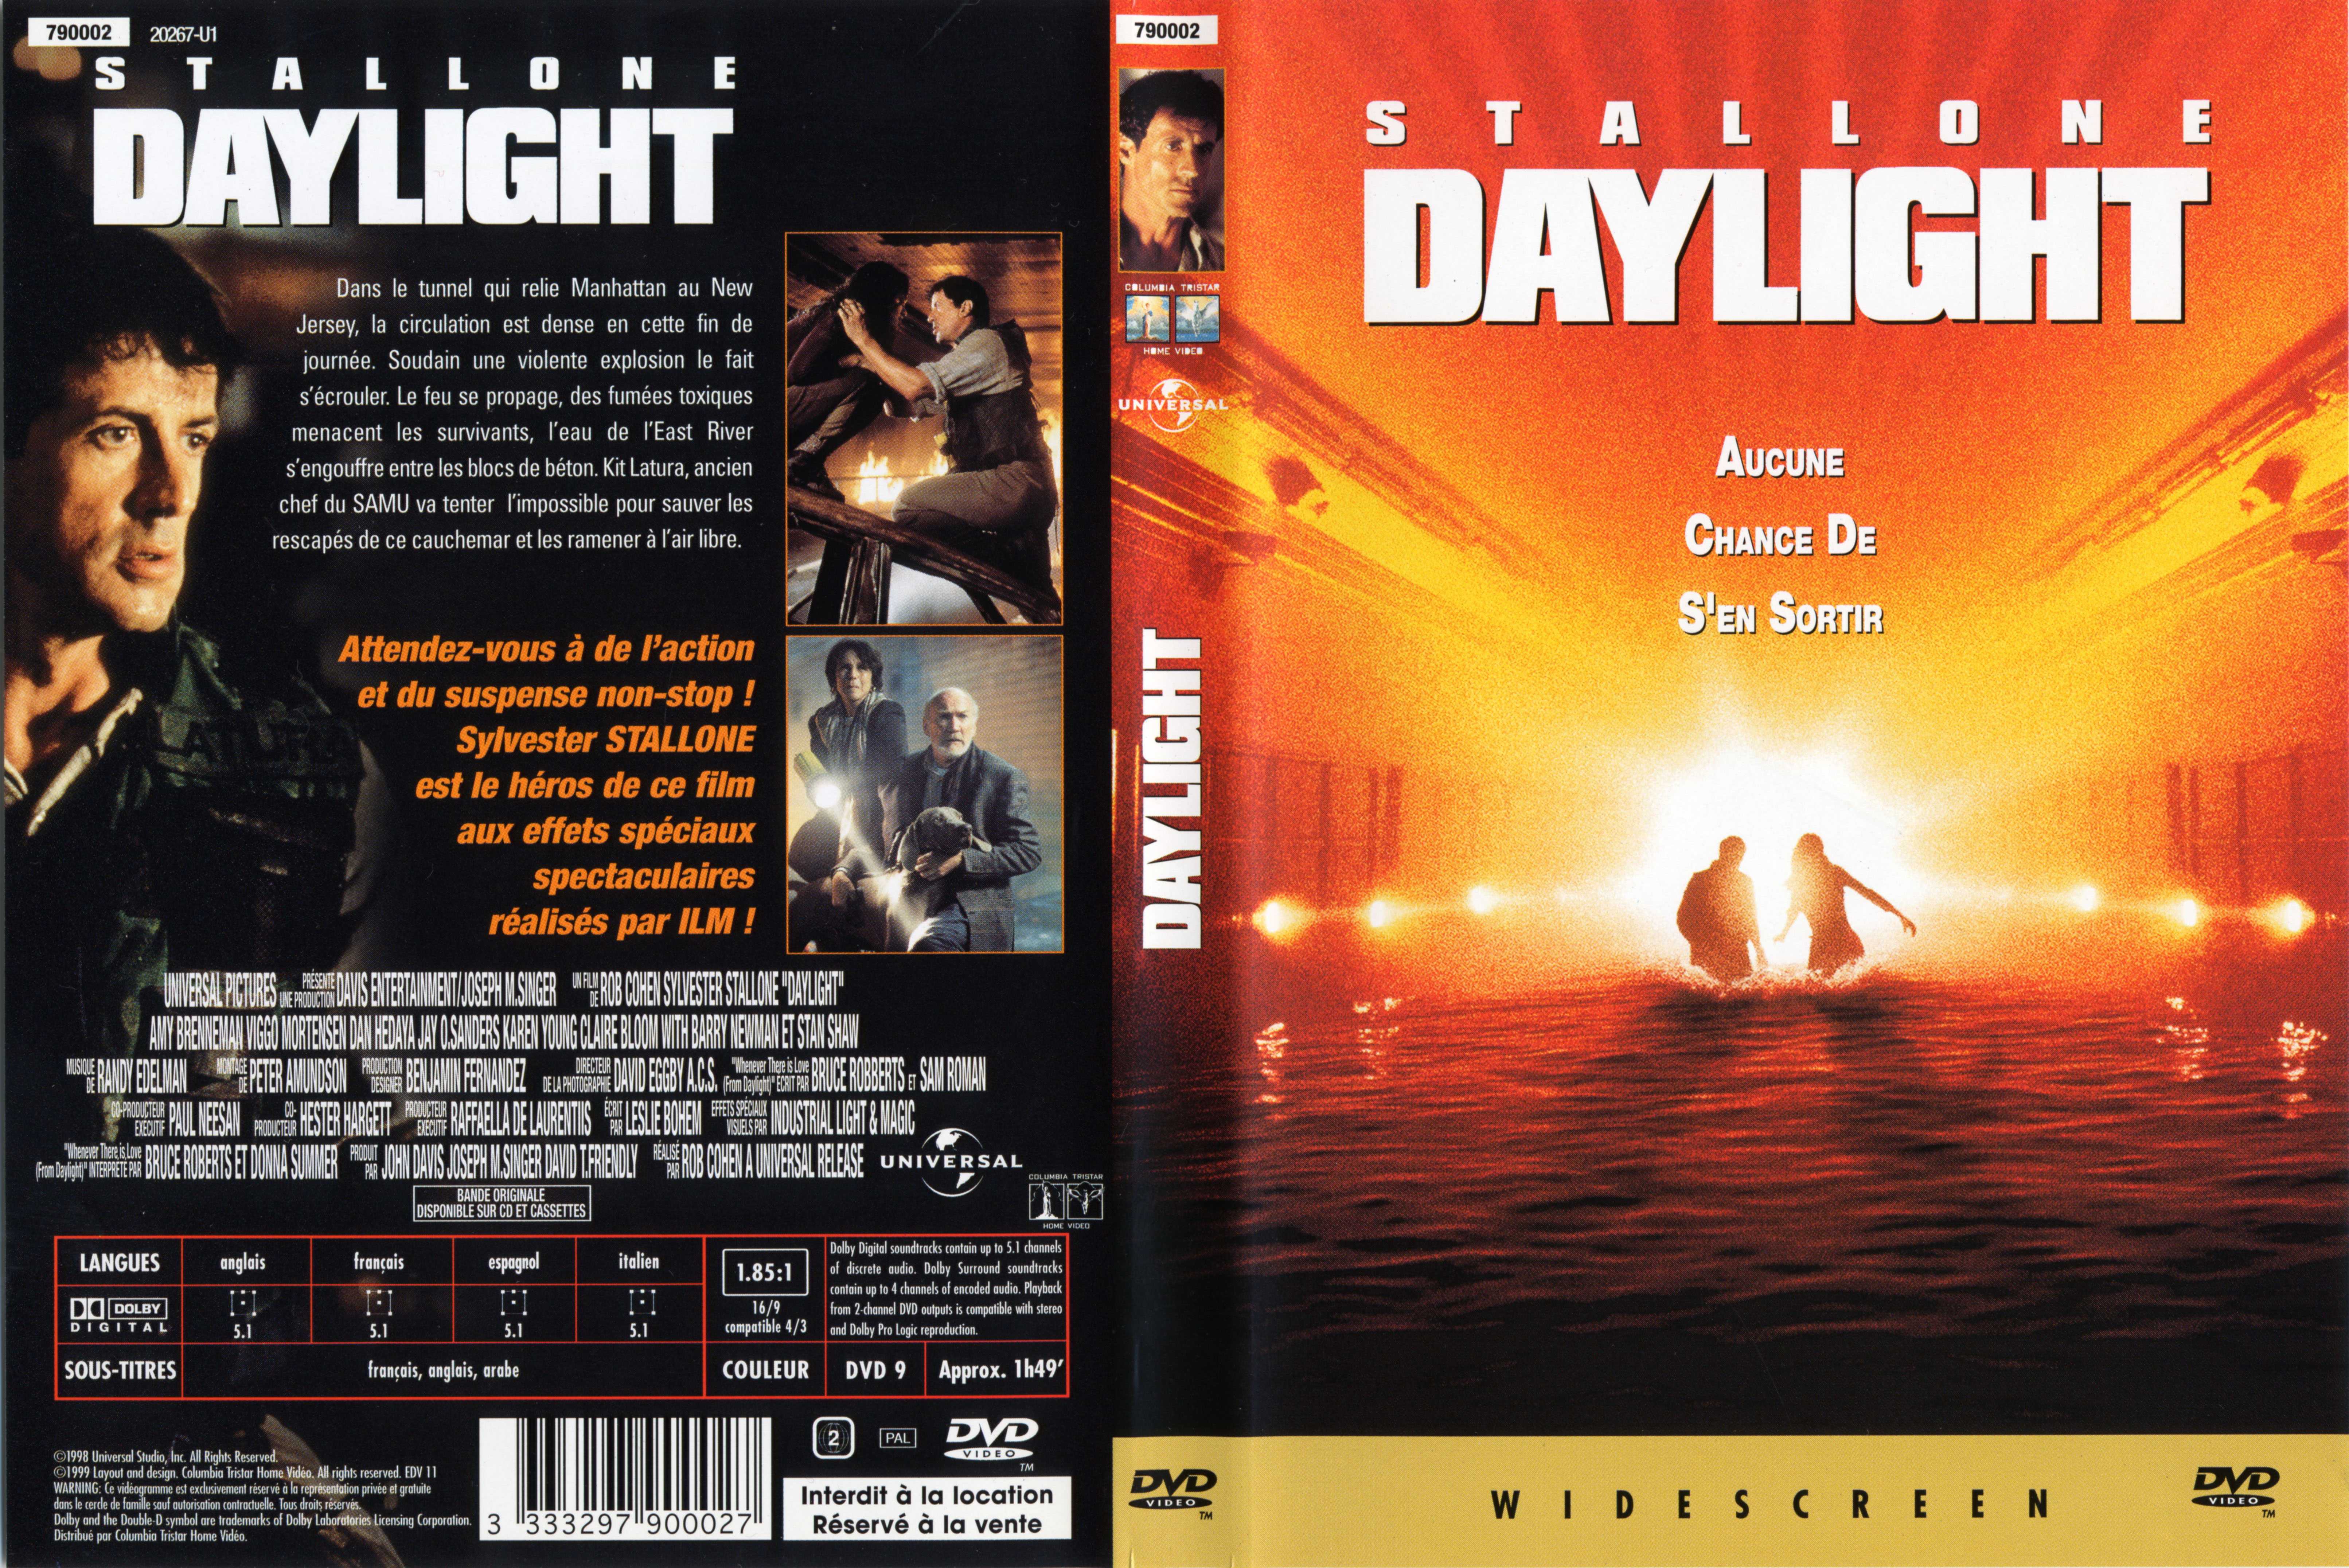 Jaquette DVD Daylight v2